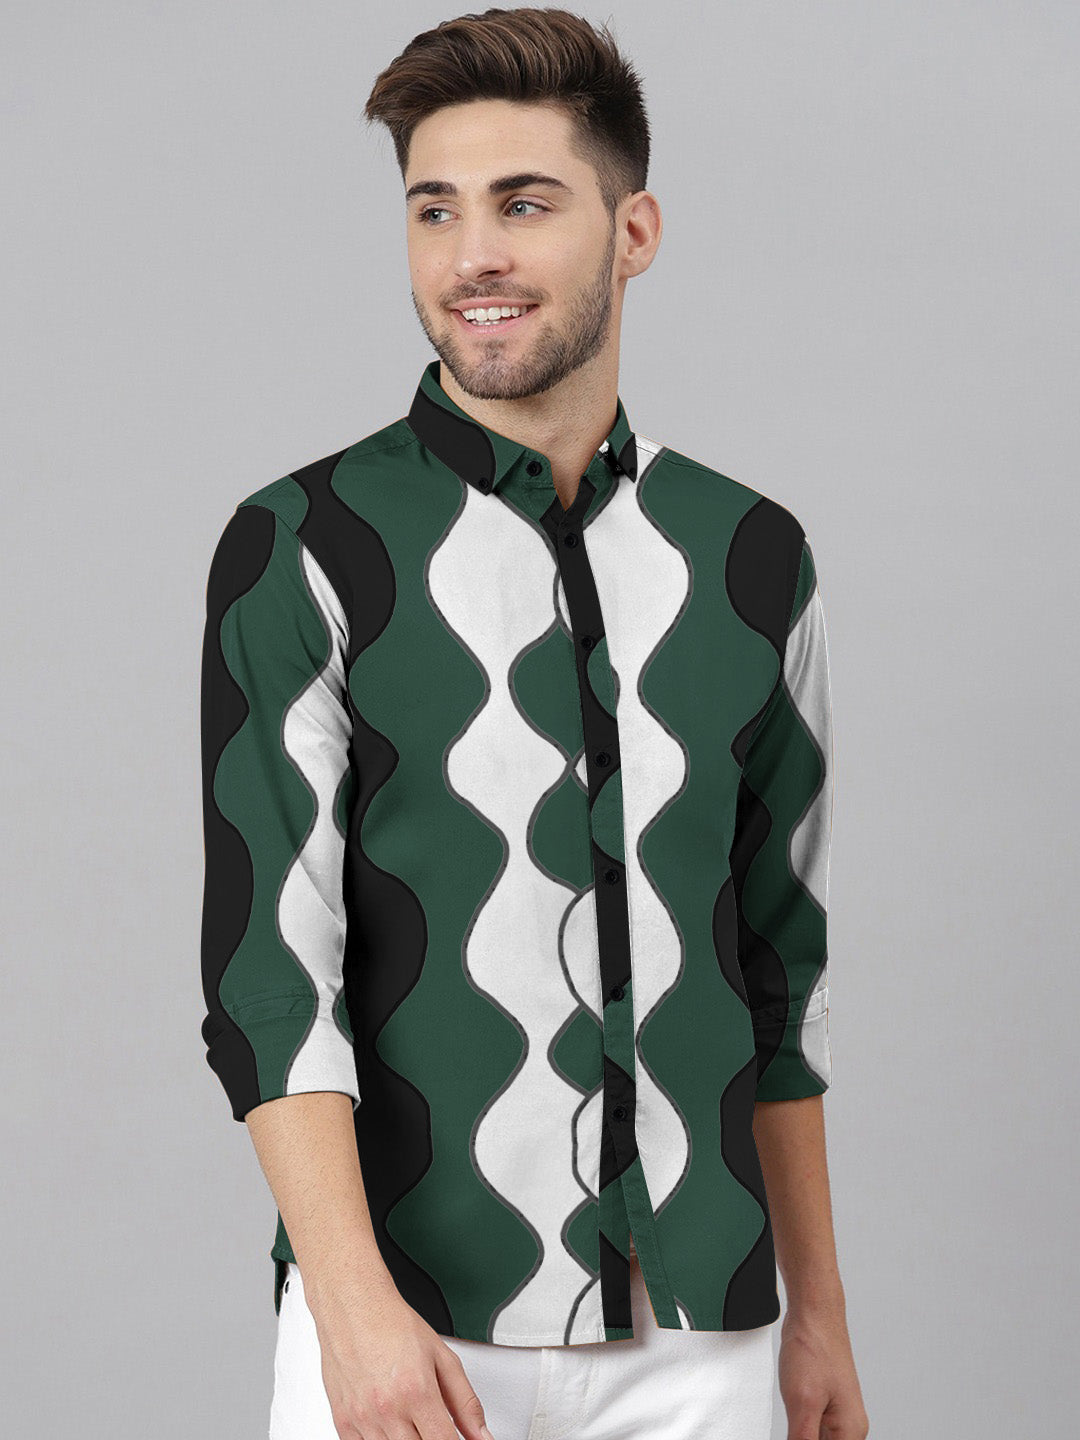 Oxen Nexoluce Premium Slim Fit Casual Shirt For Men-Green Black & White Print-RT835